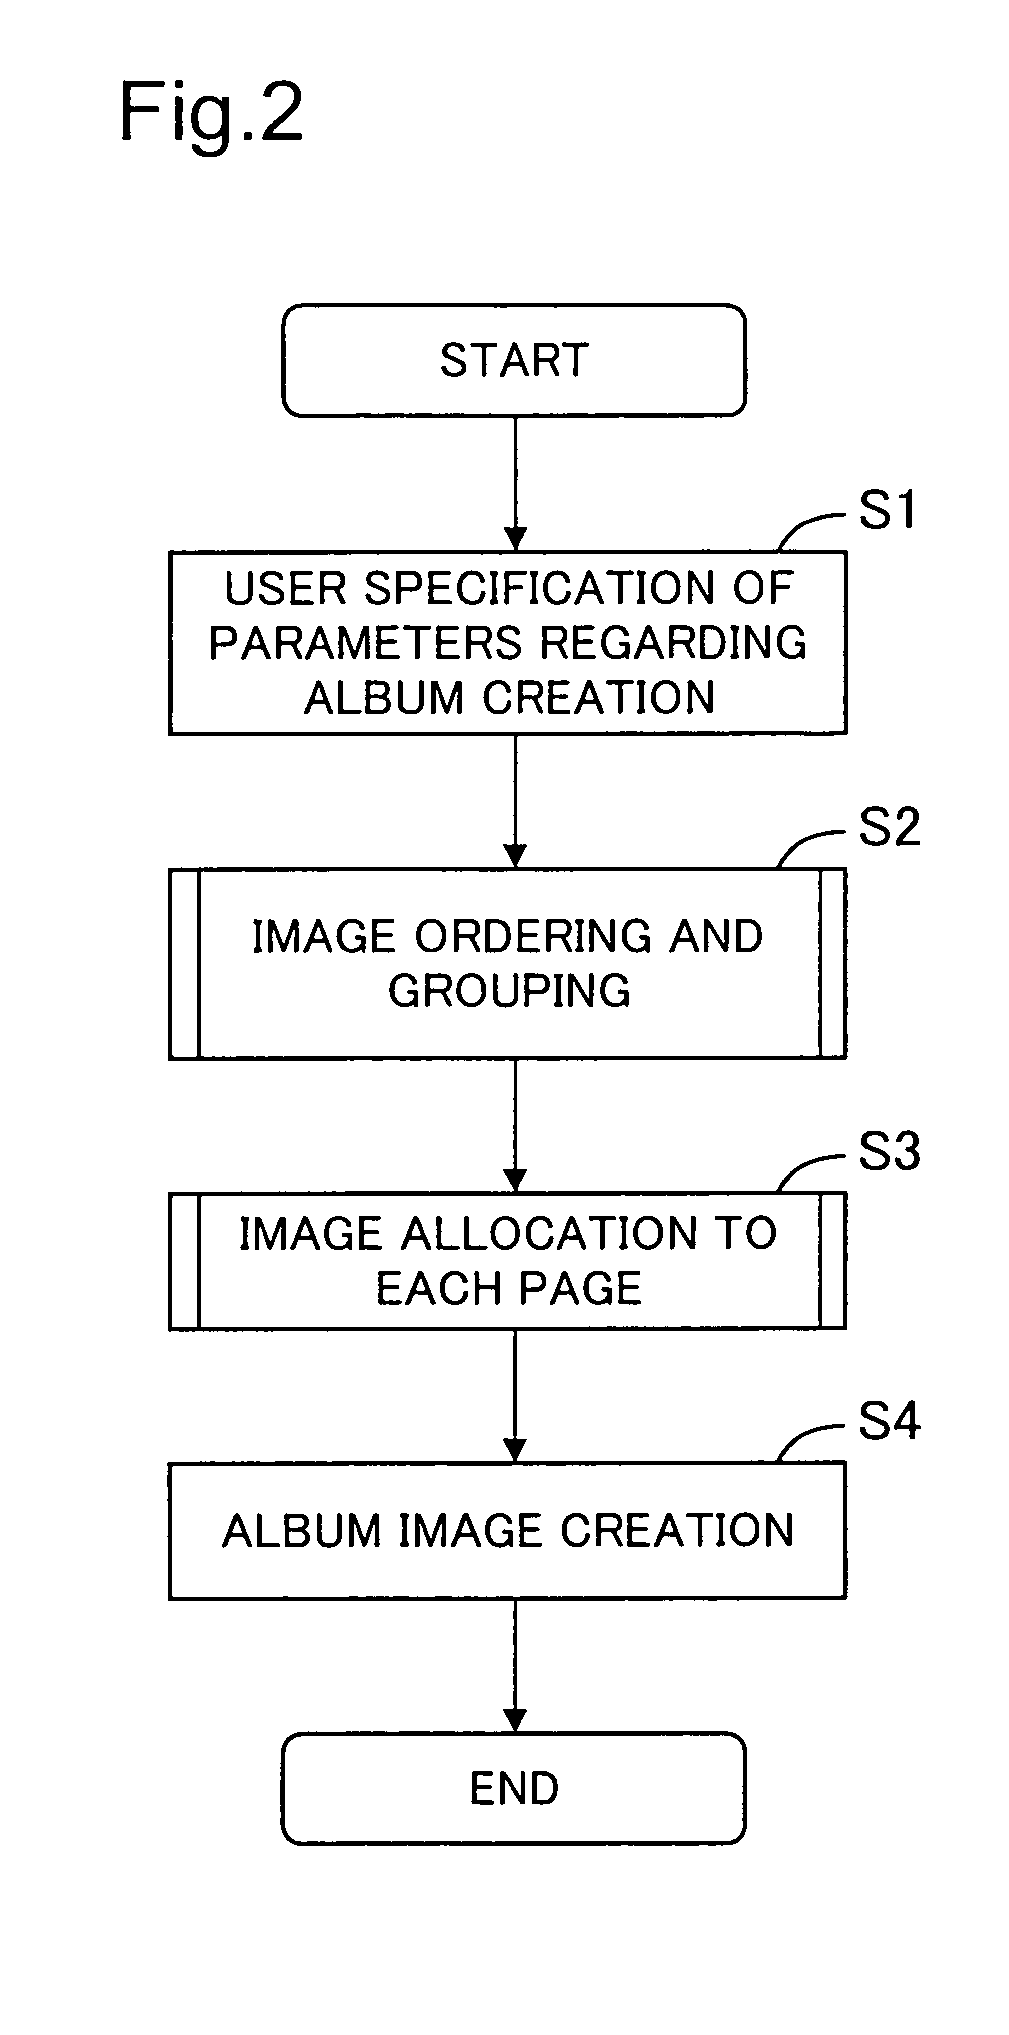 Image arrangement for electronic album